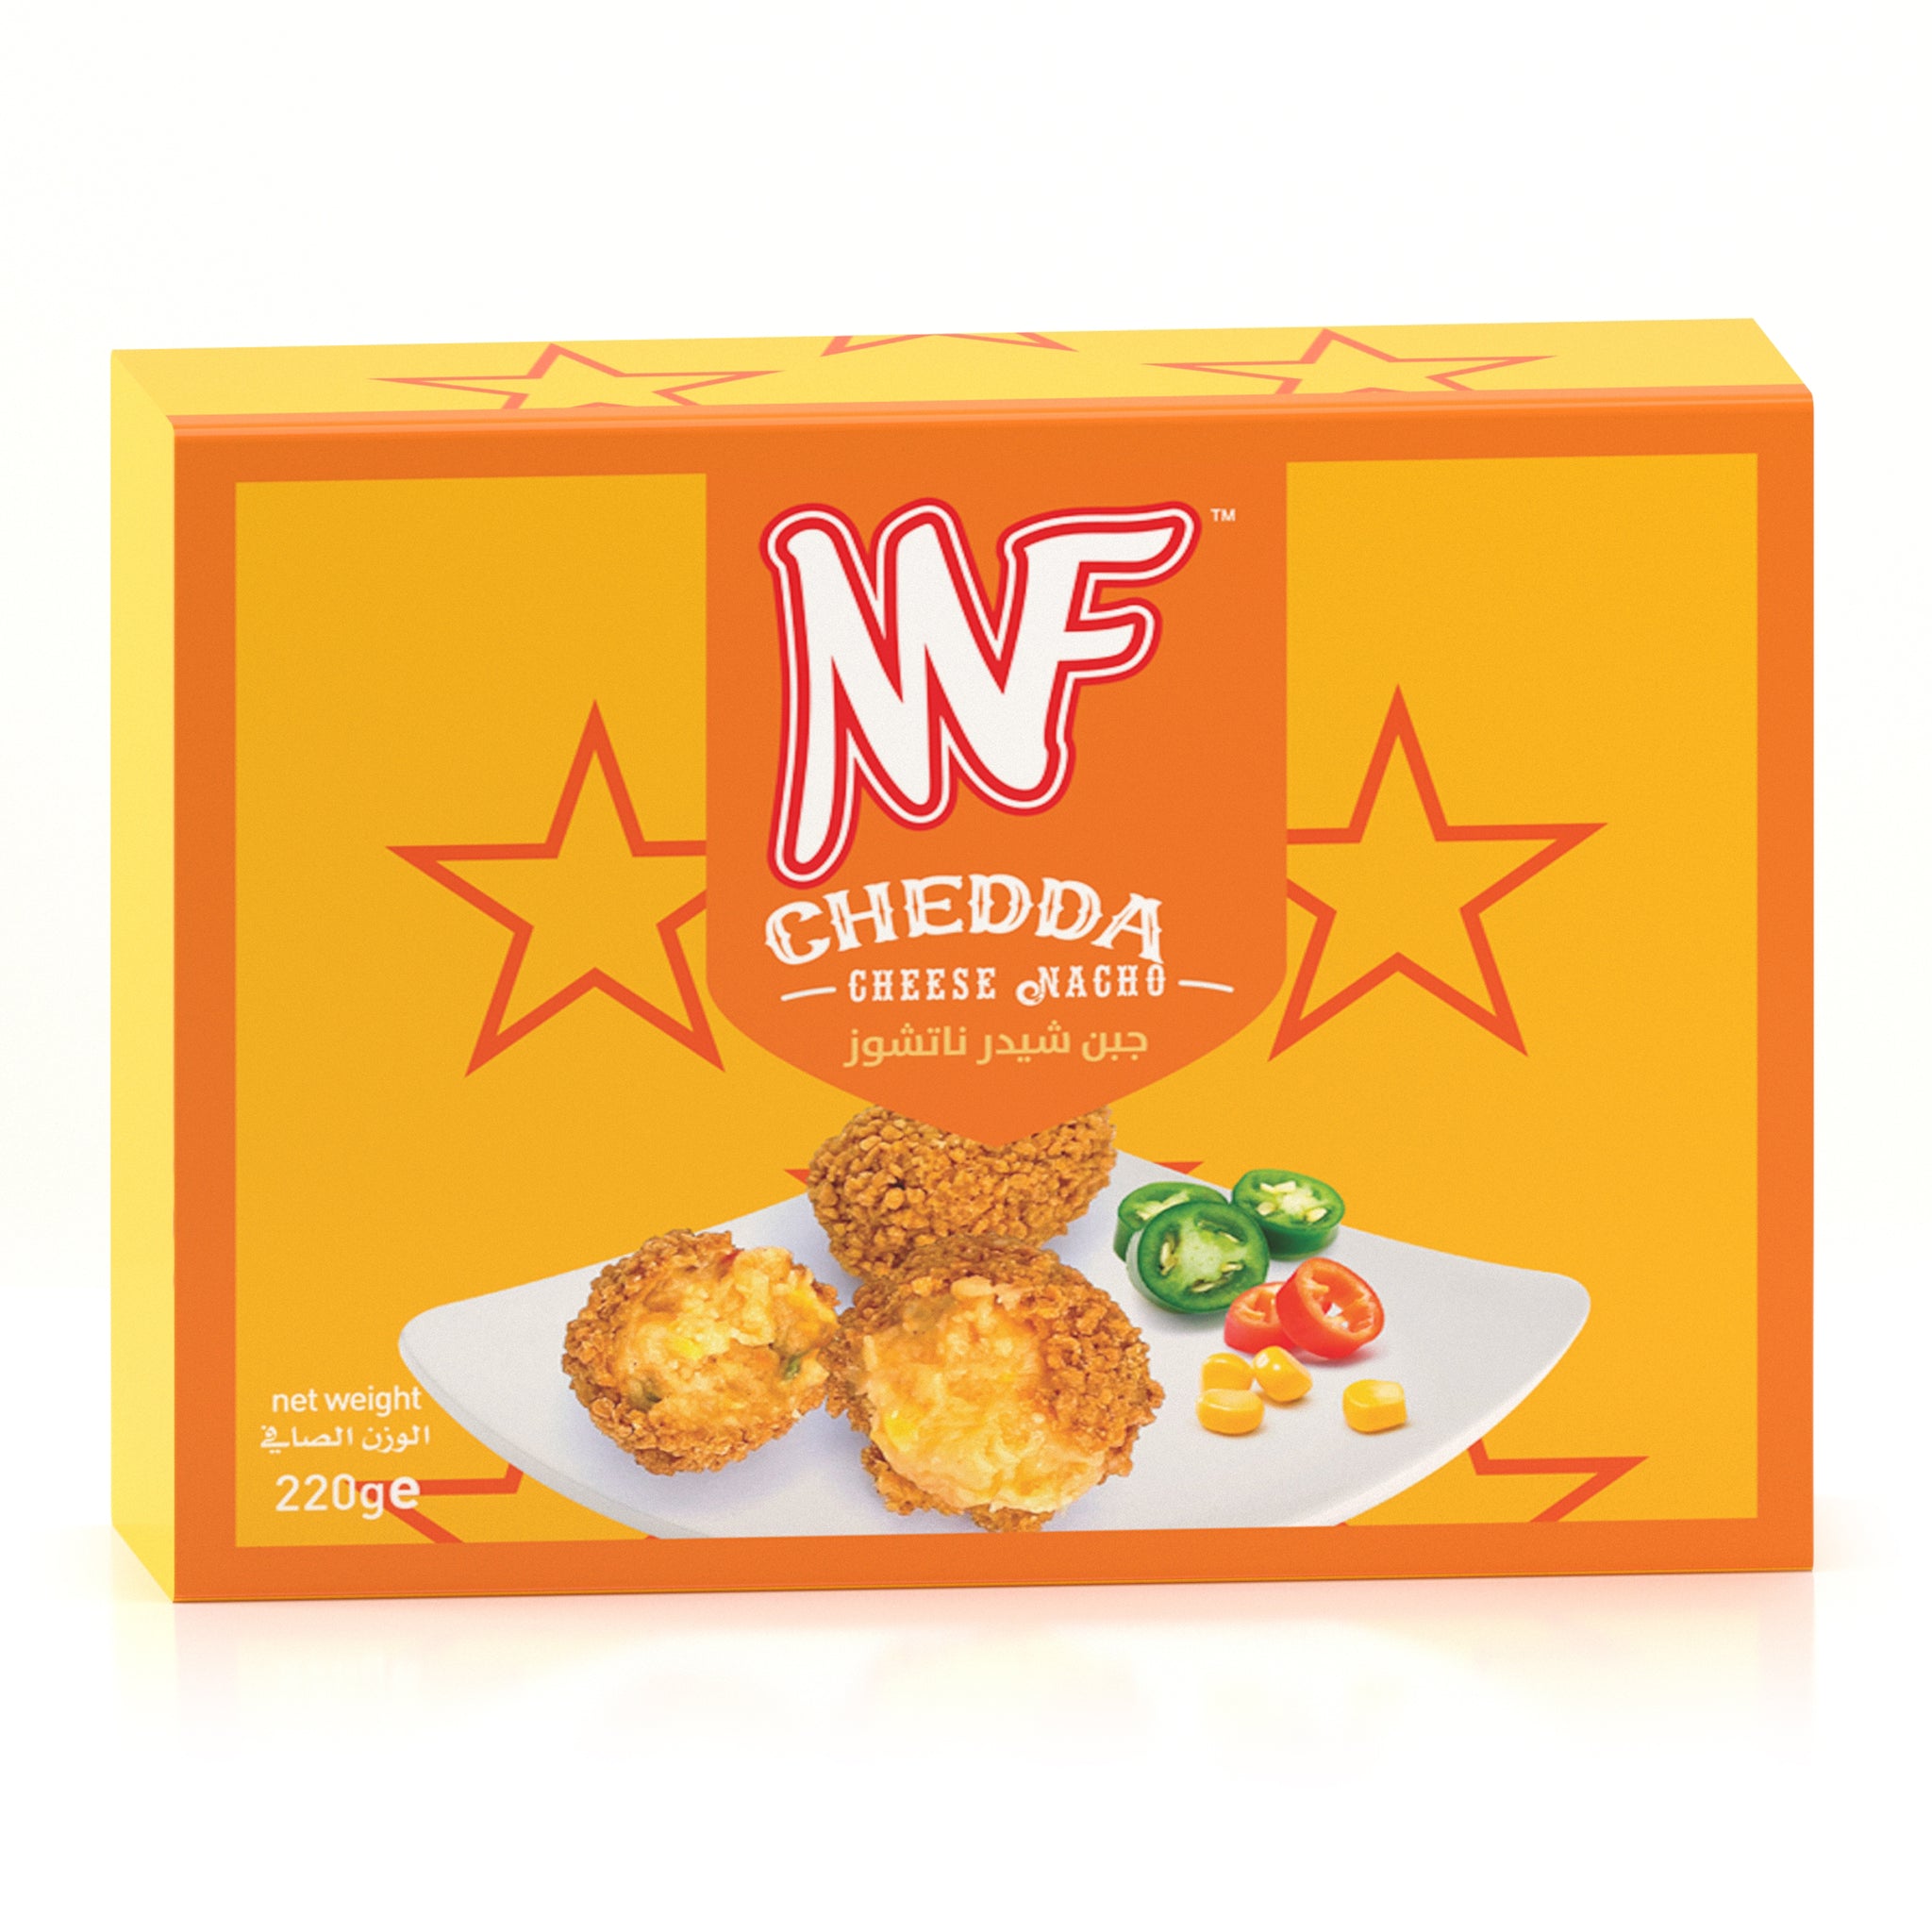 MF Chedda Cheese Nacho 220g